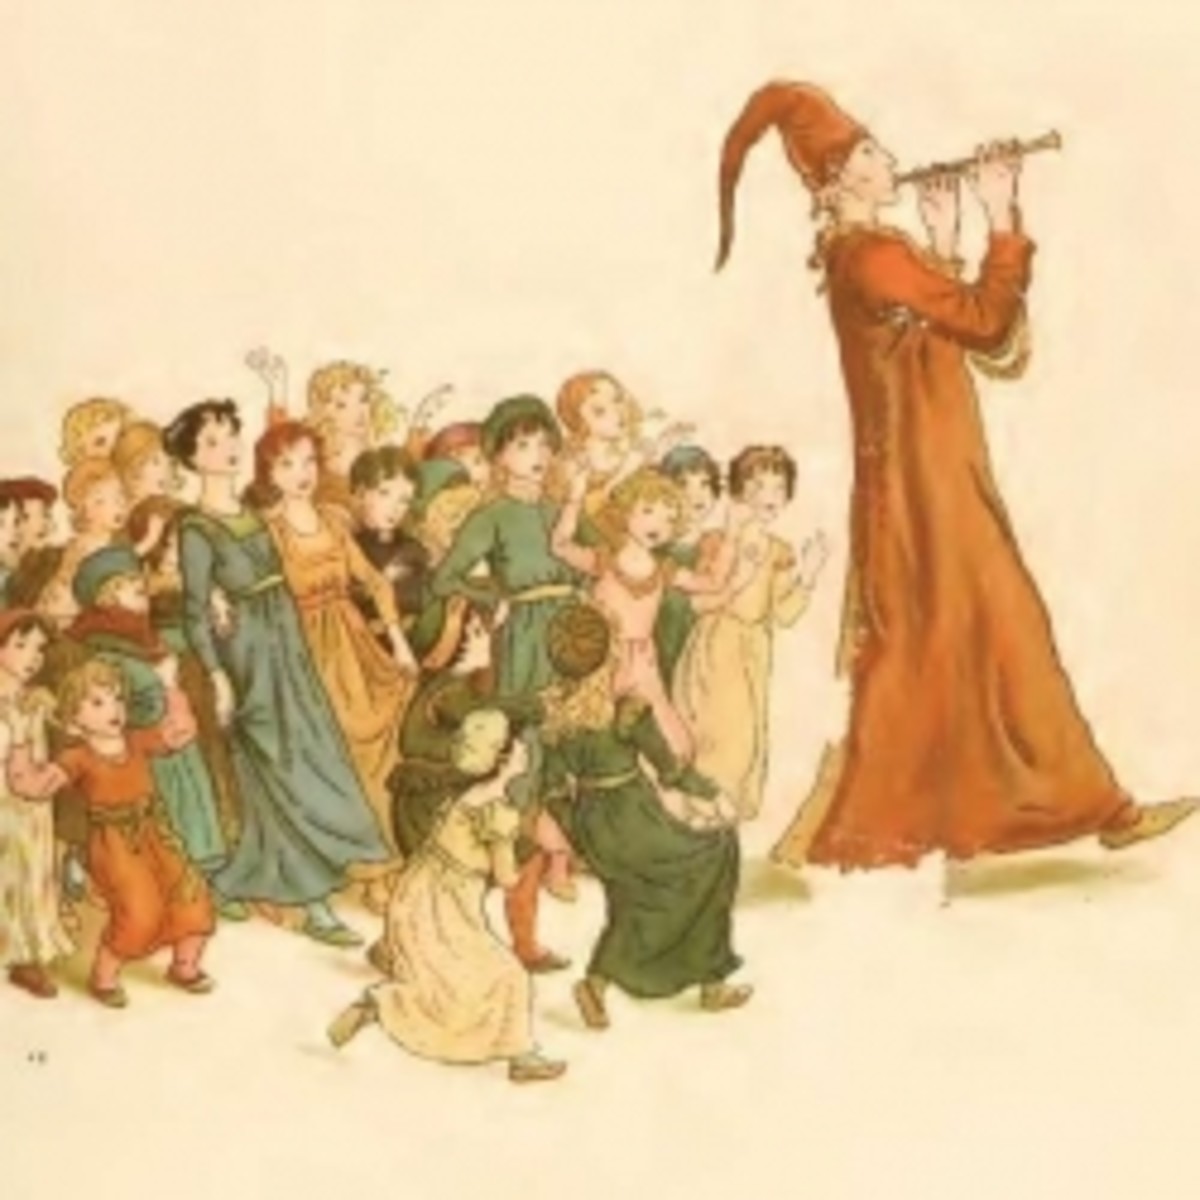 The Pied Piper of Hamelin: legend, story or poem for kids?